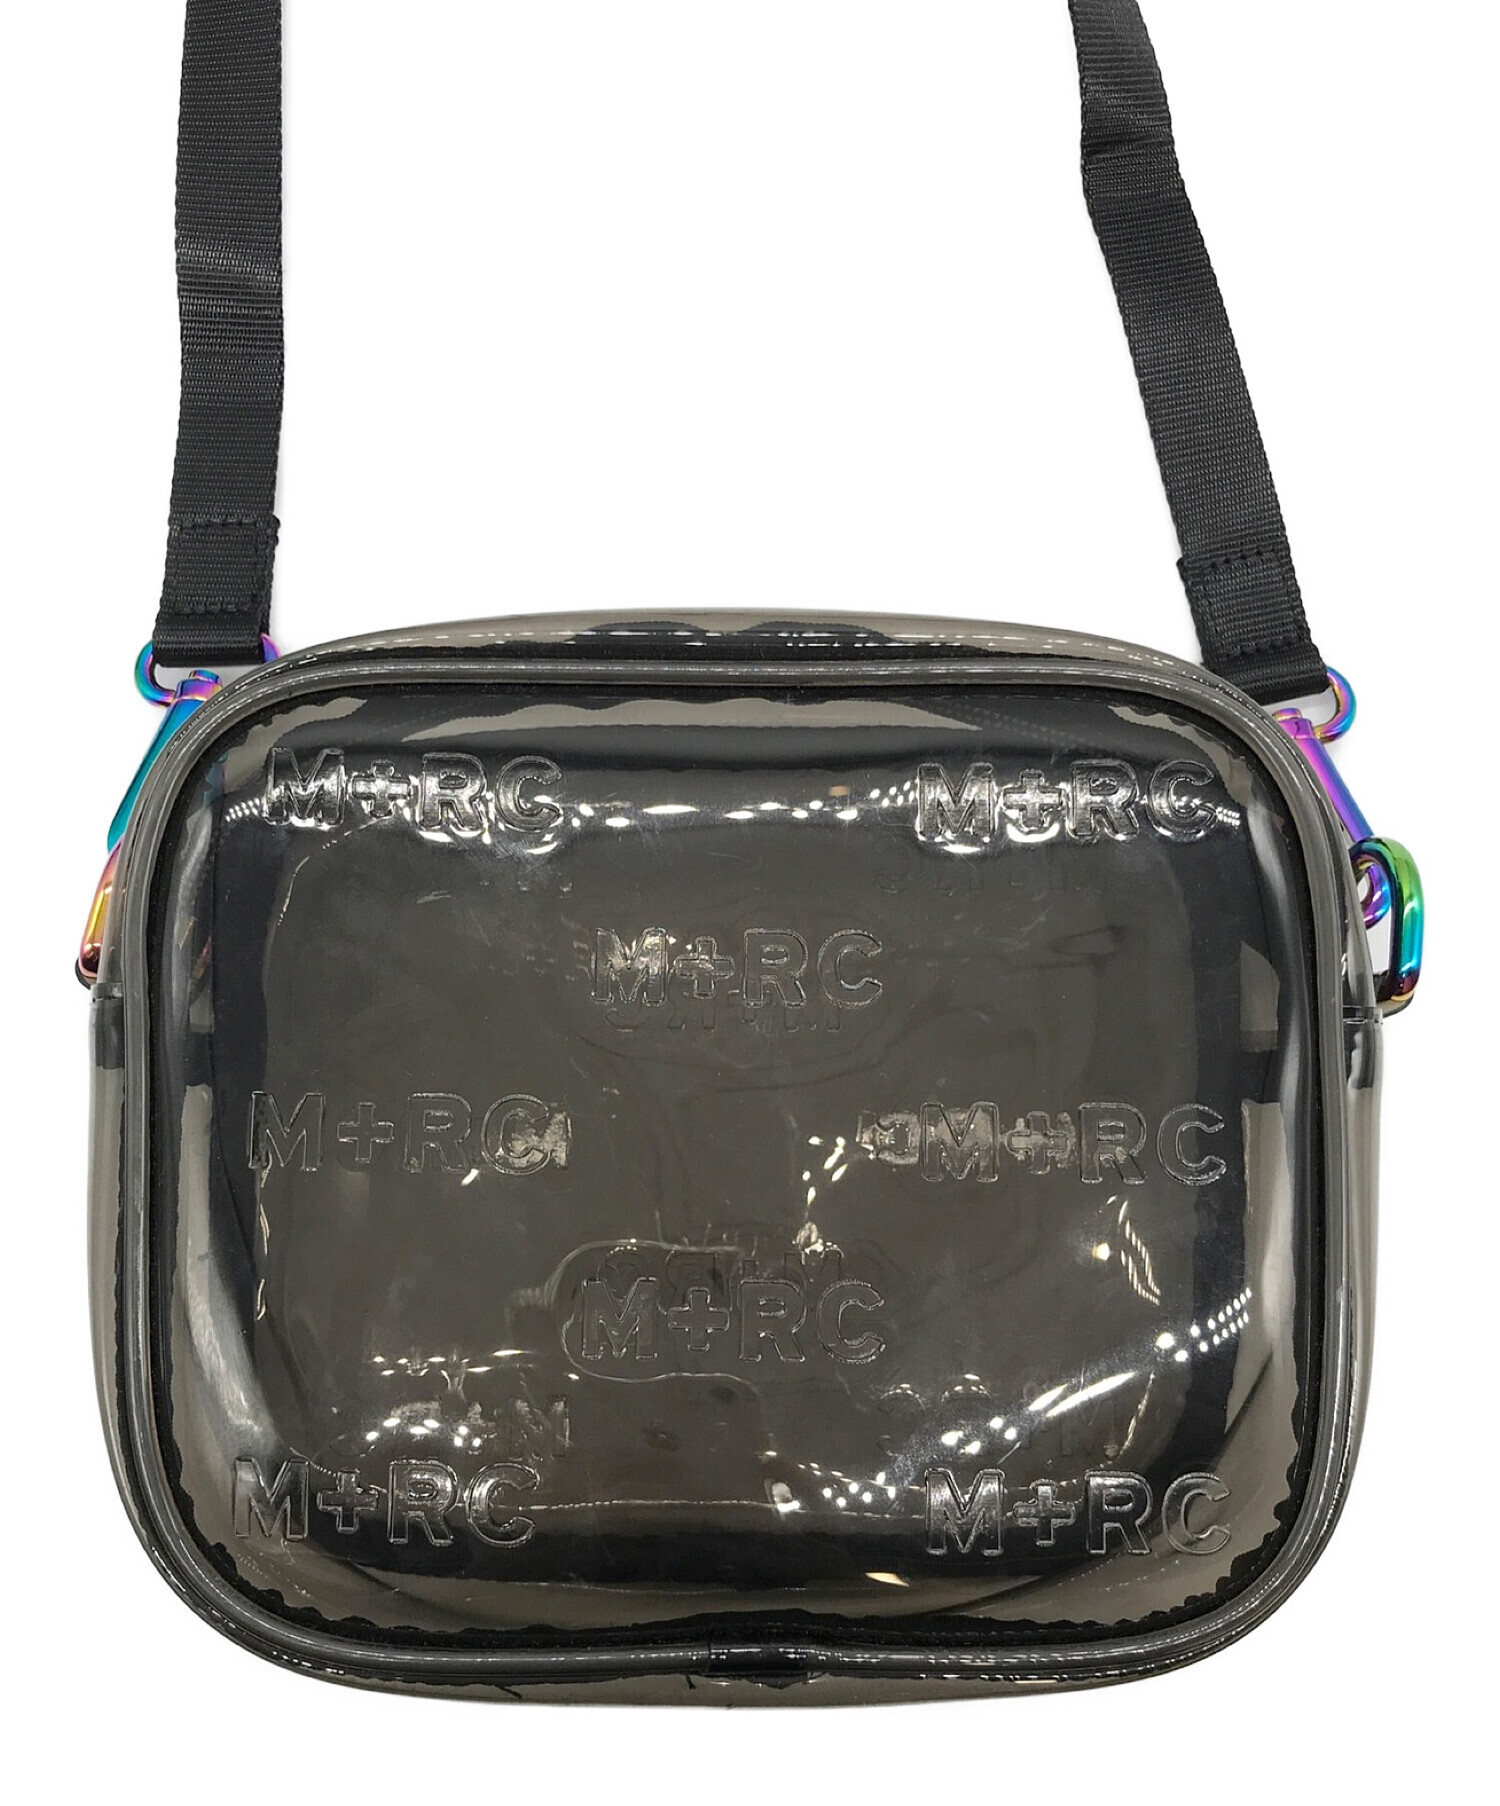 M+RC NOIR (マルシェノア) EMBOSSED BLACK TRANSPARENT PVC BAG ブラック